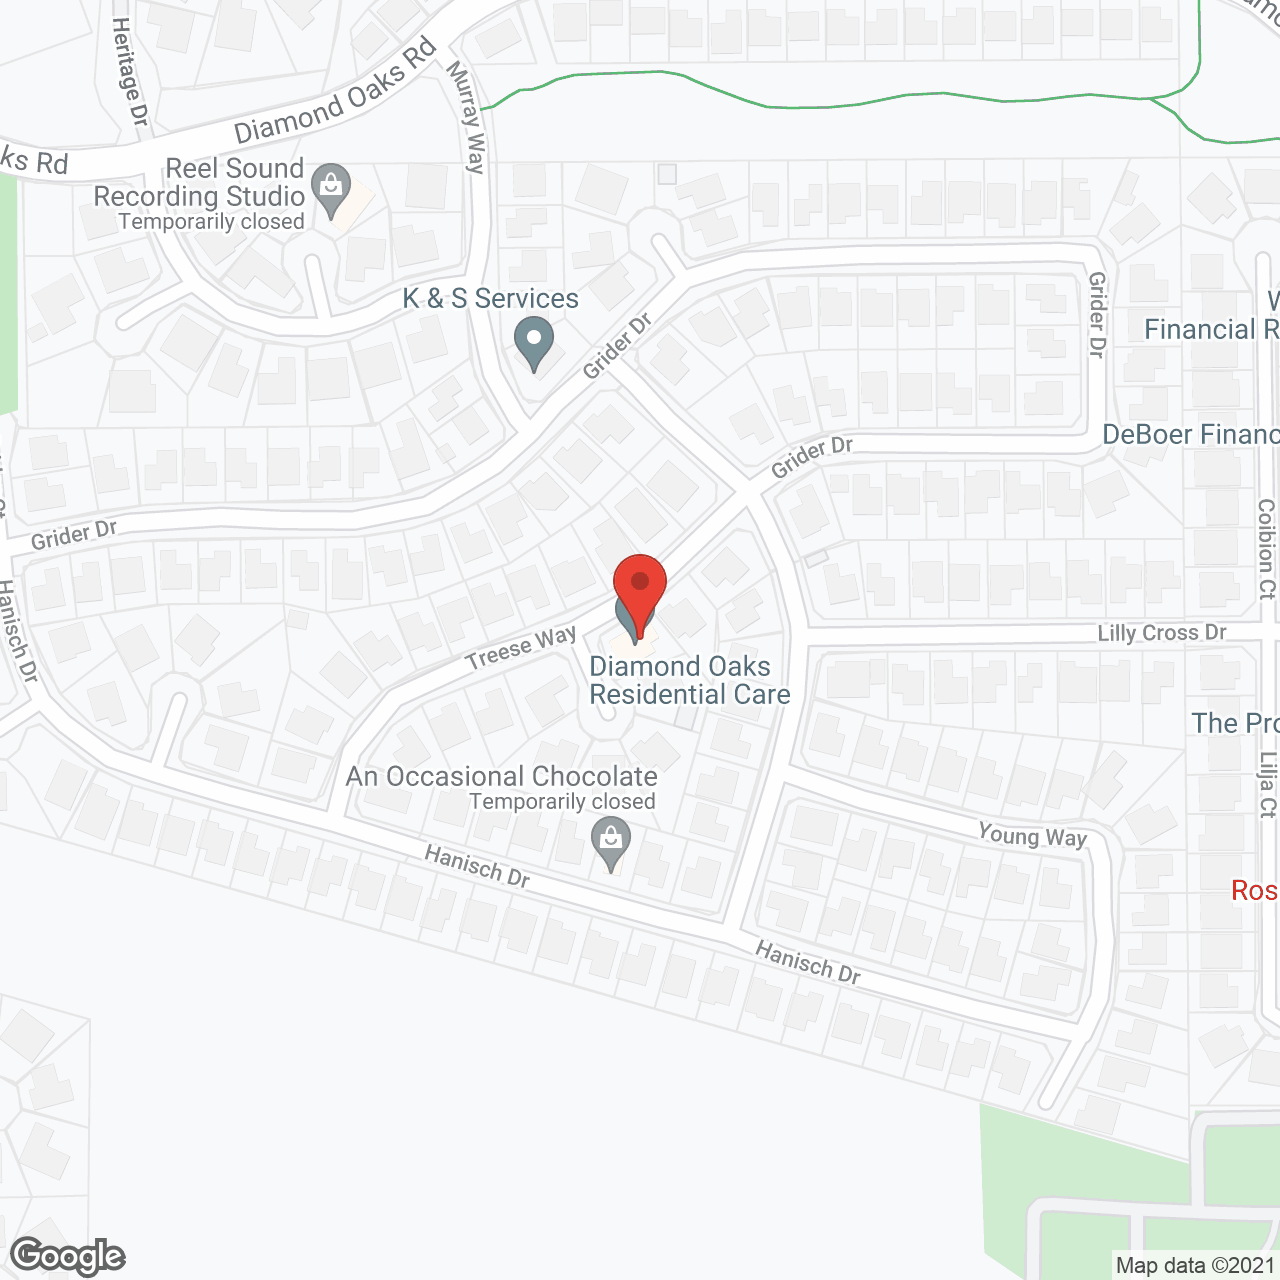 Diamond Oaks Residential Care in google map